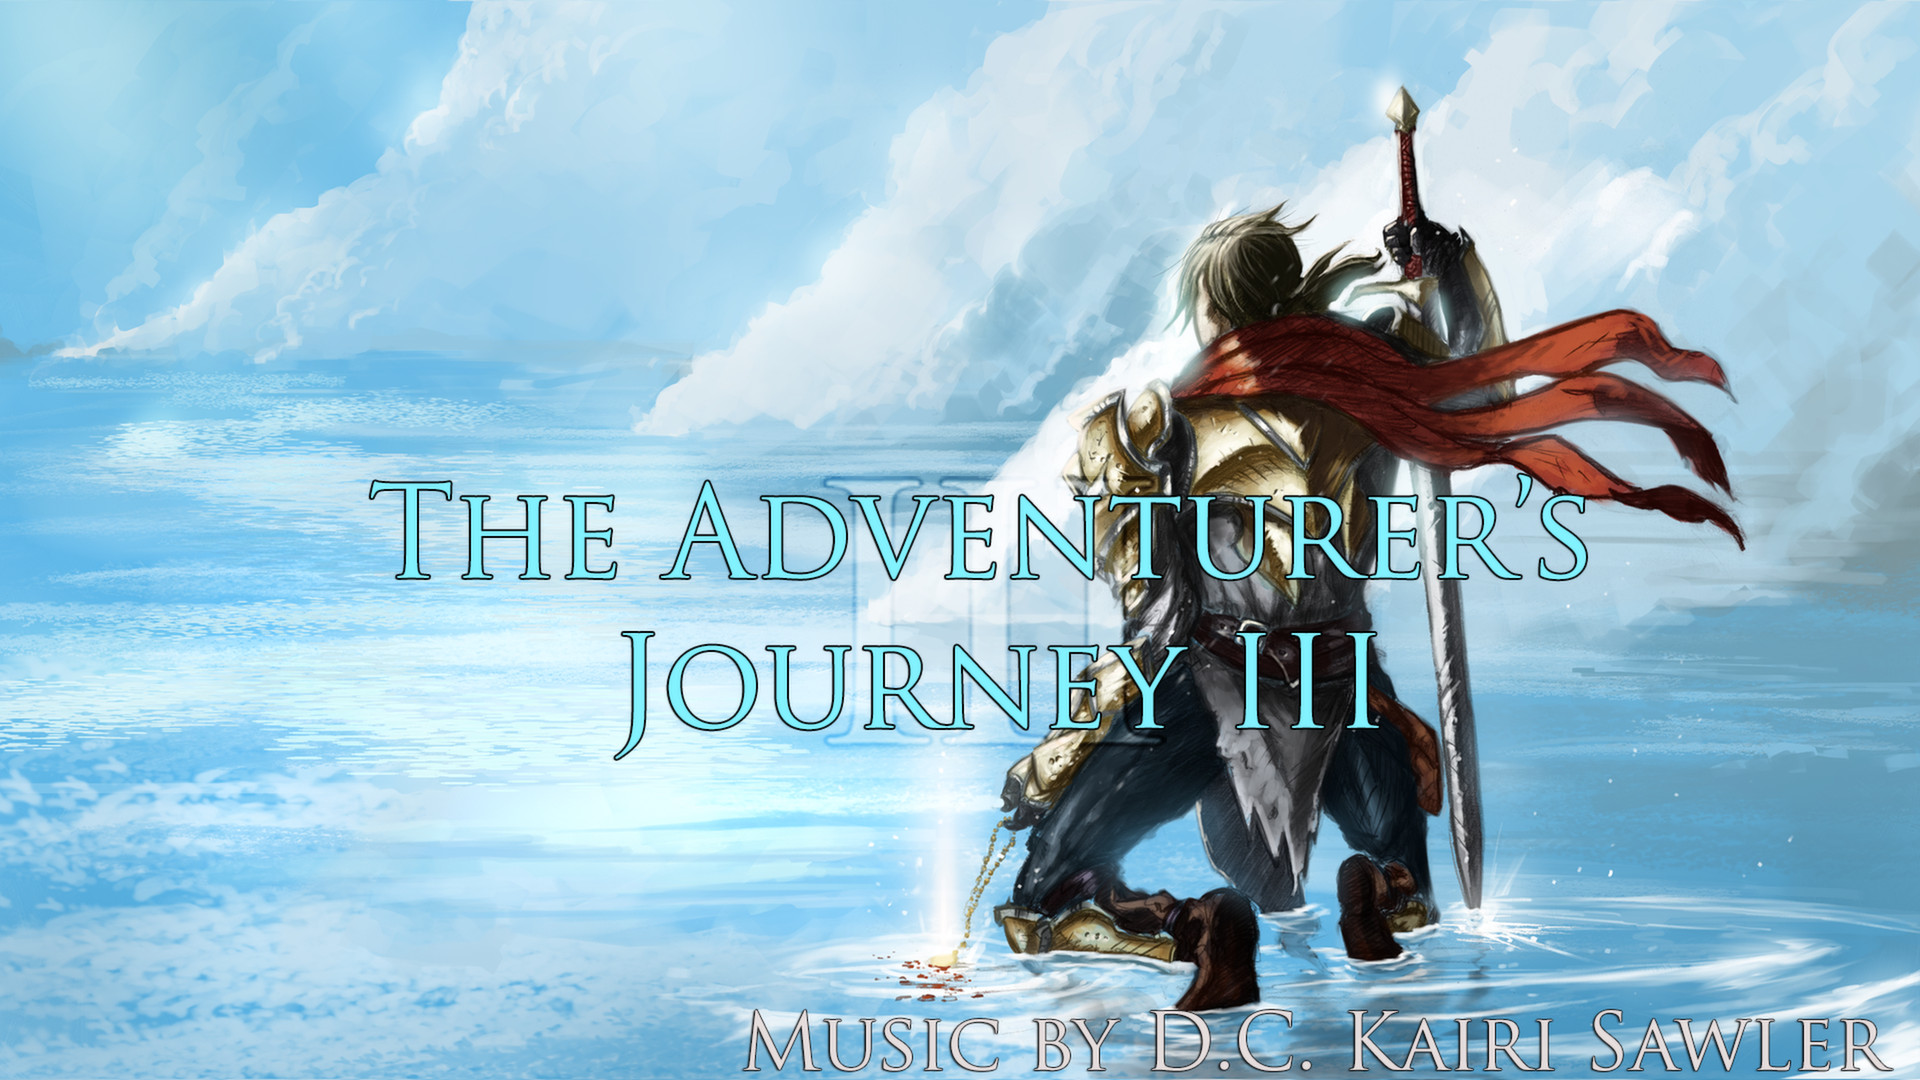 RPG Maker VX Ace - The Adventurer's Journey III DLC Steam CD Key, 4.51$